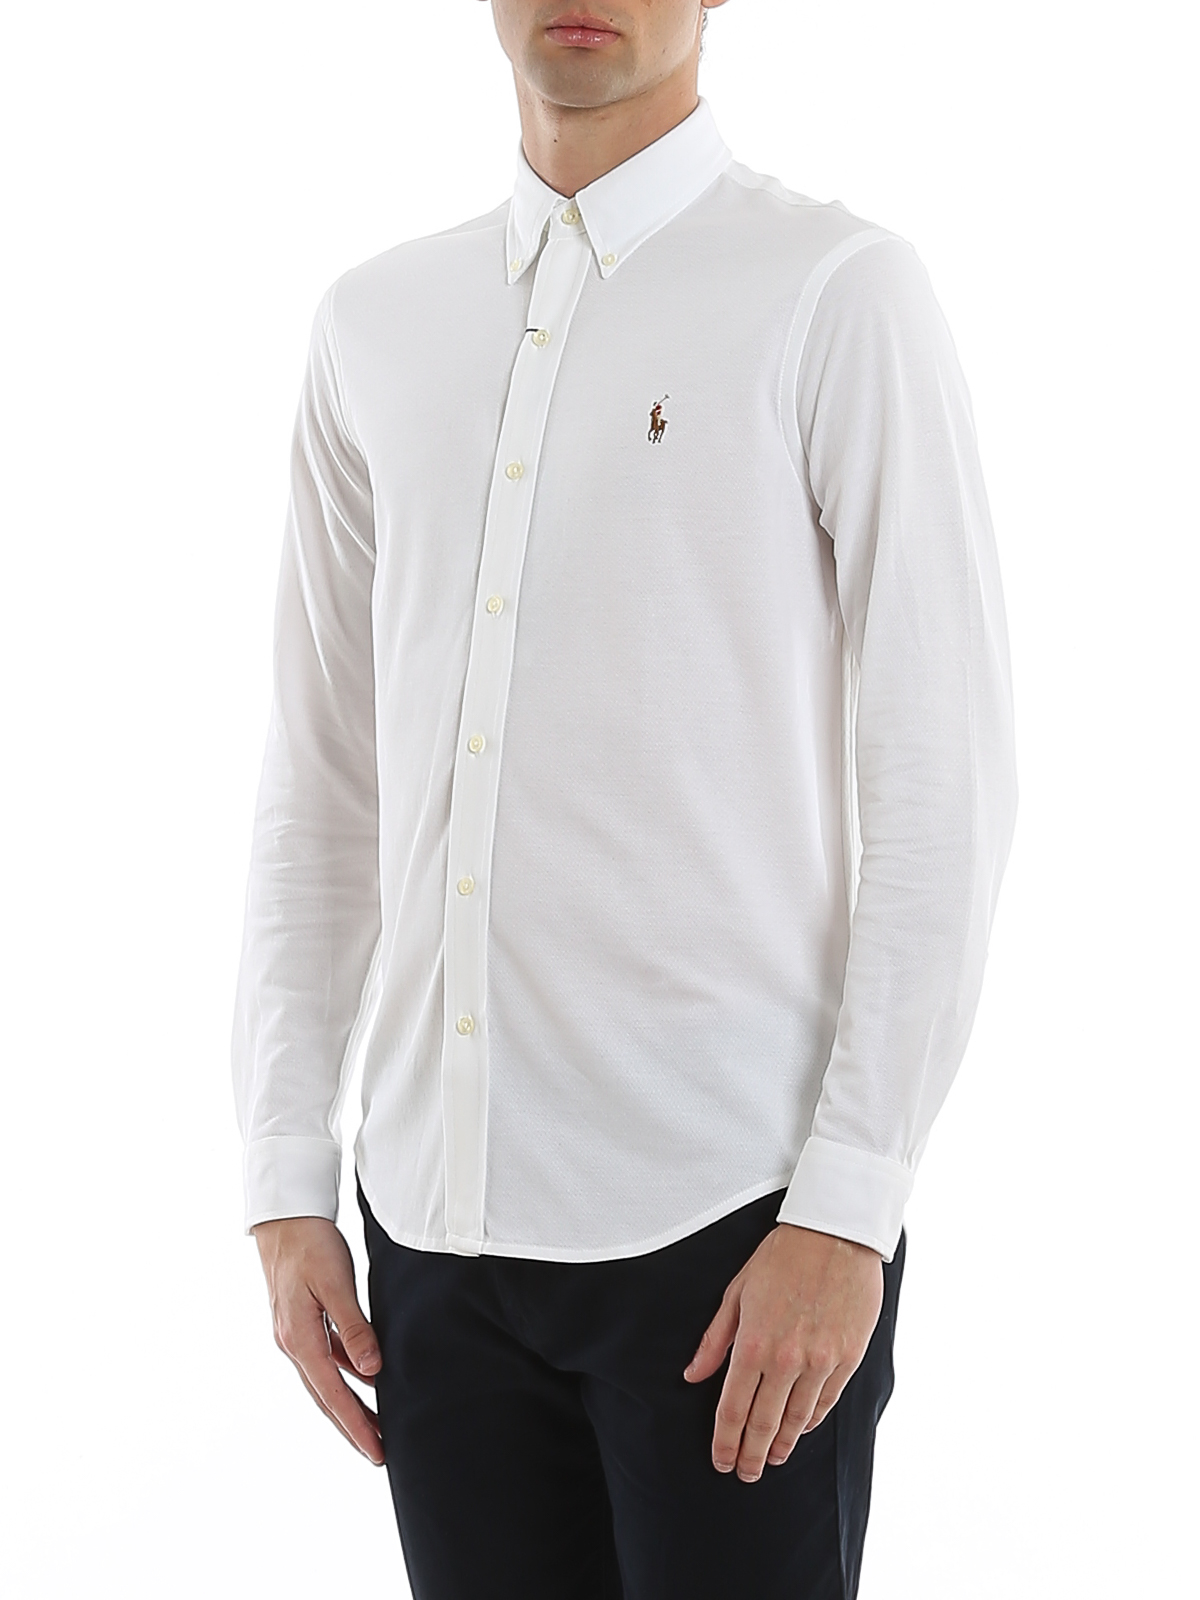 Shirts Polo Ralph Lauren - Oxford knit cotton pique shirt - 710728724001